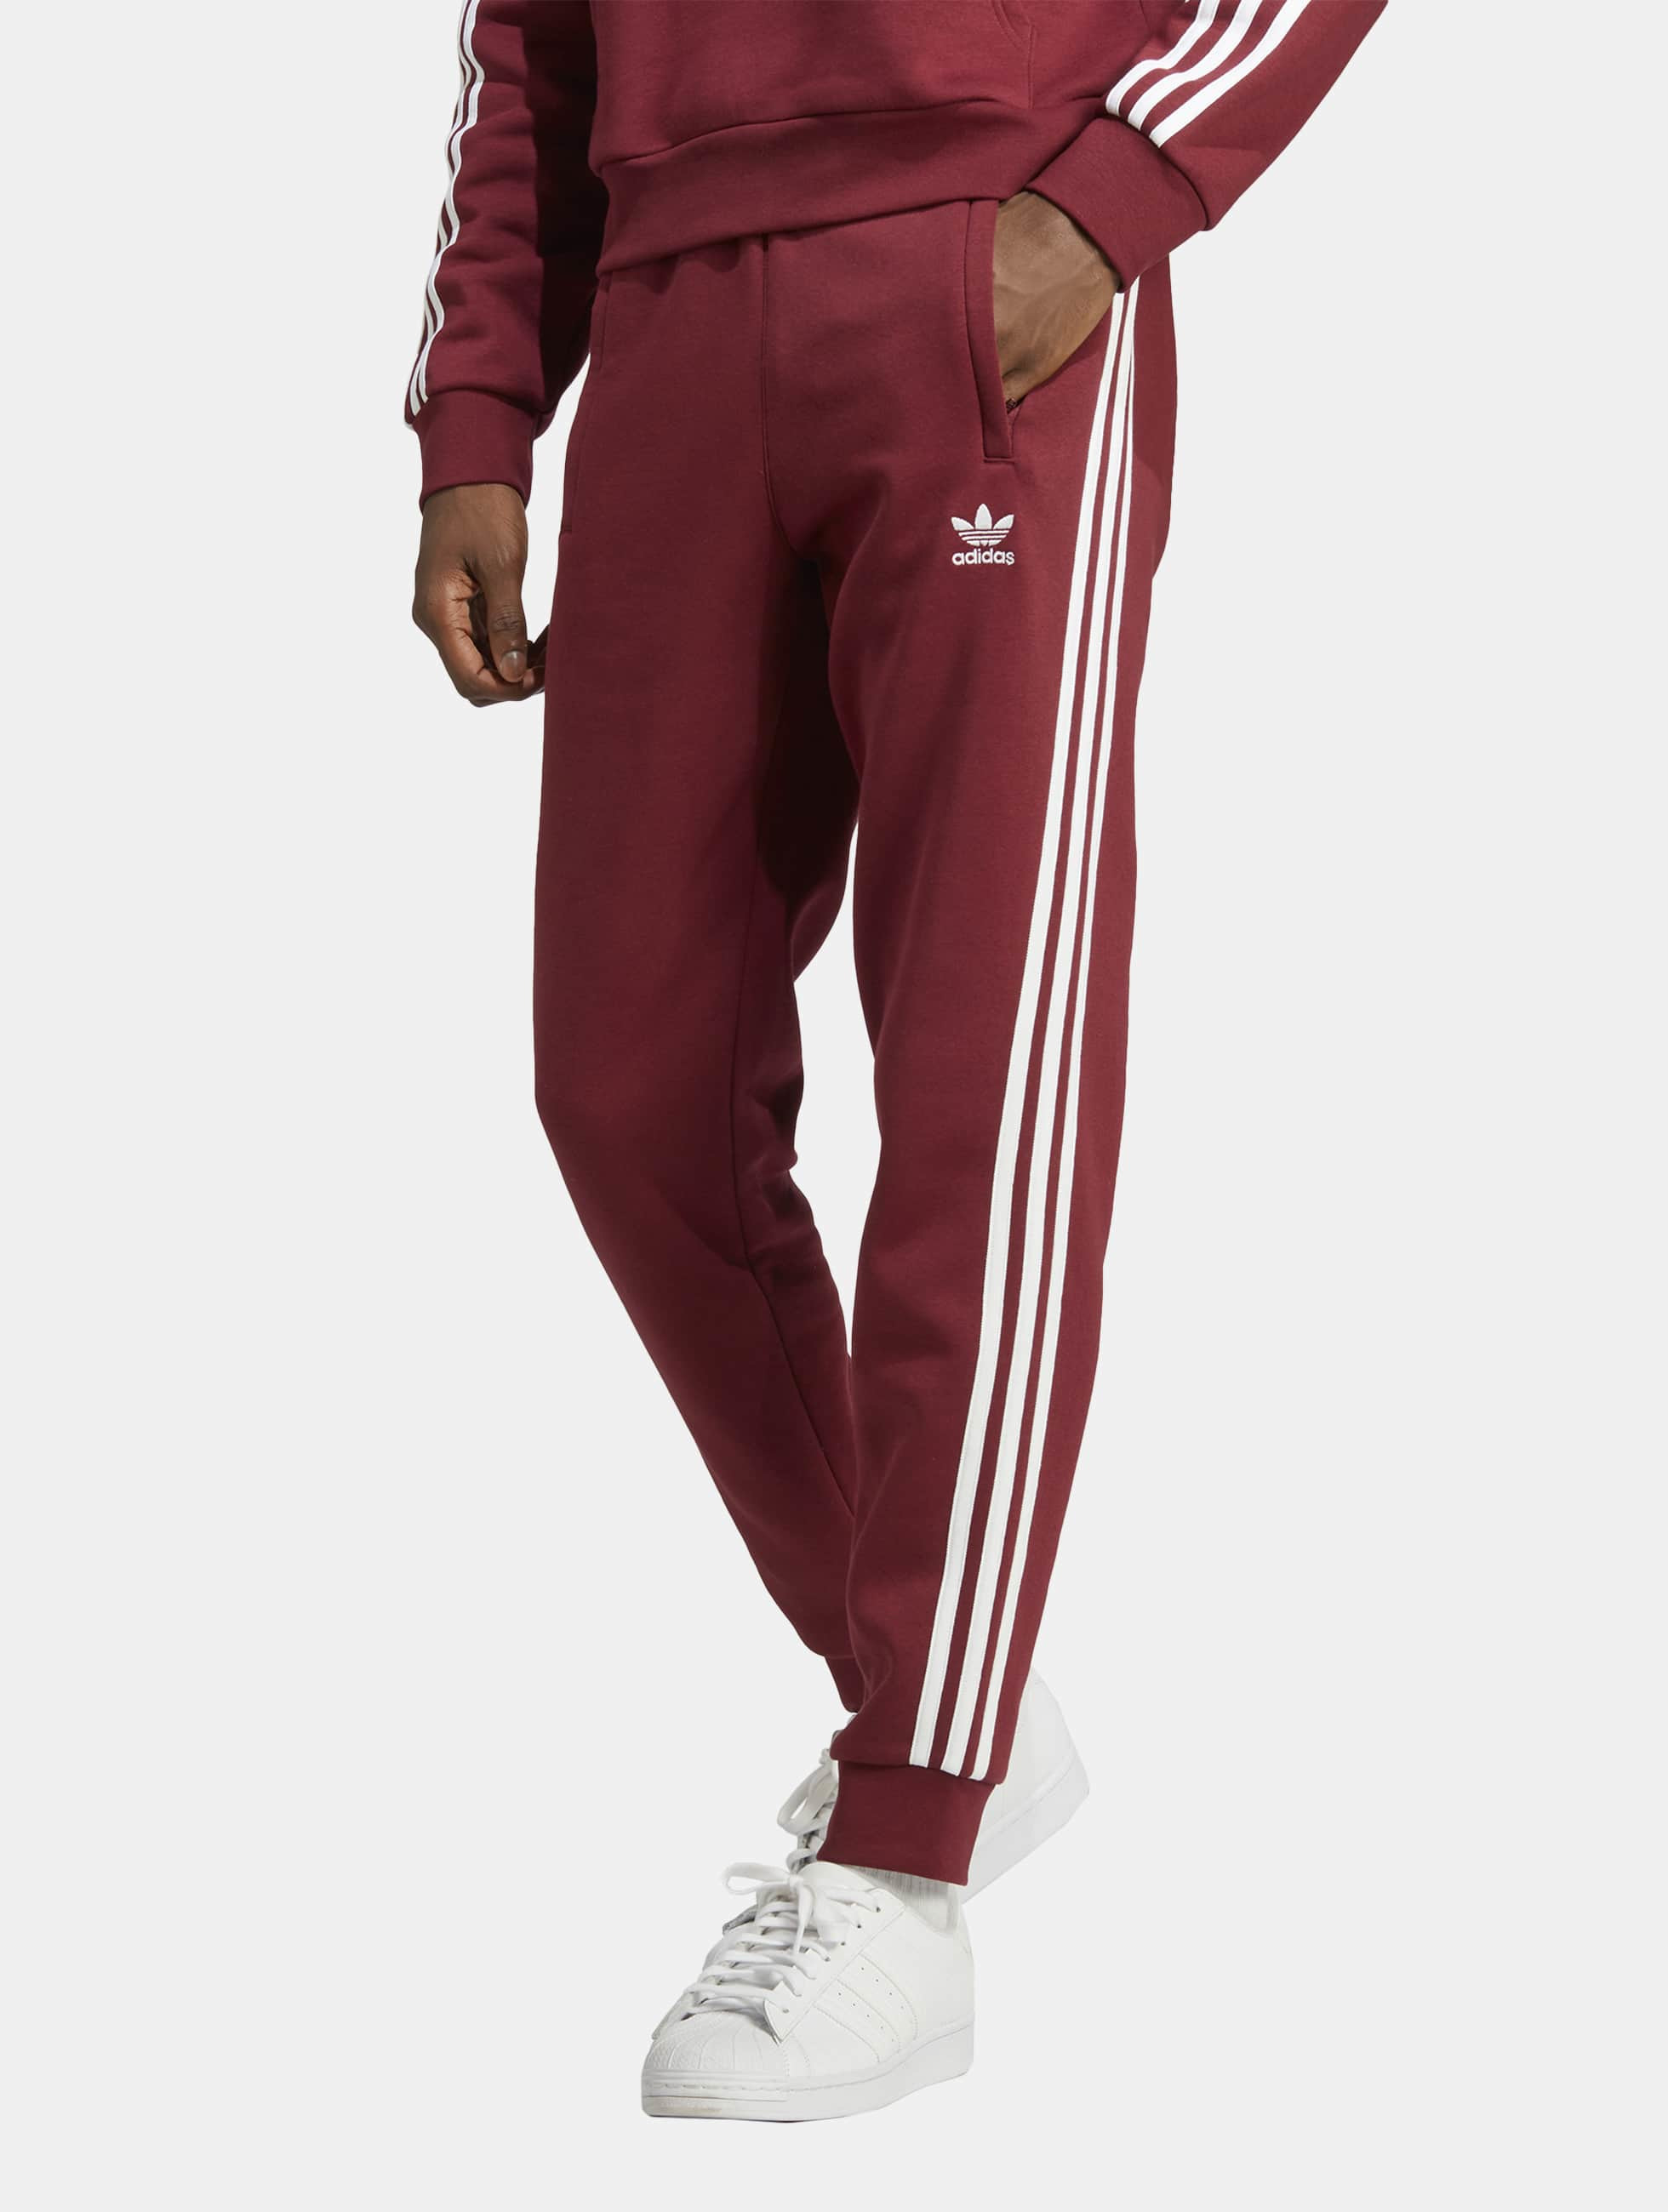 adidas Originals broek joggingbroek 3 Stripes in rood 1007243